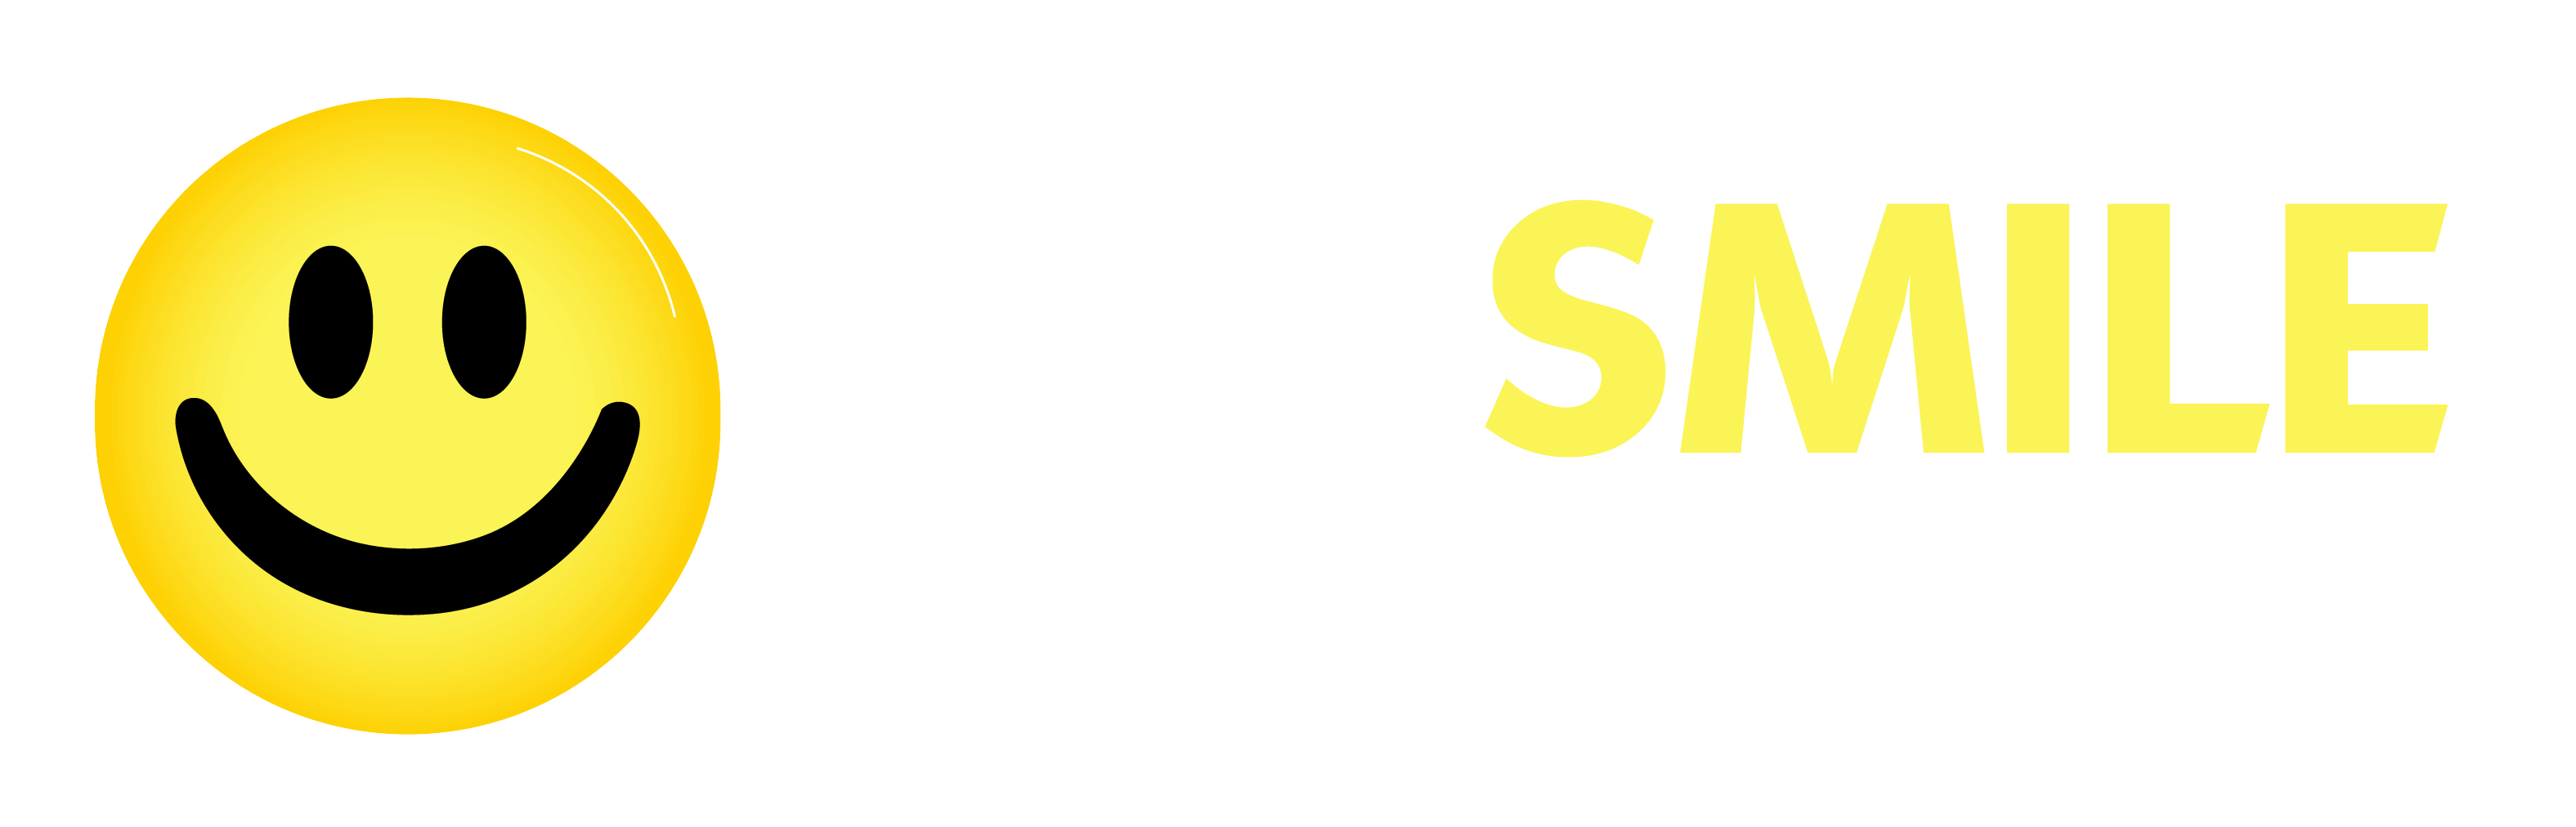 Big SMILE Foundation